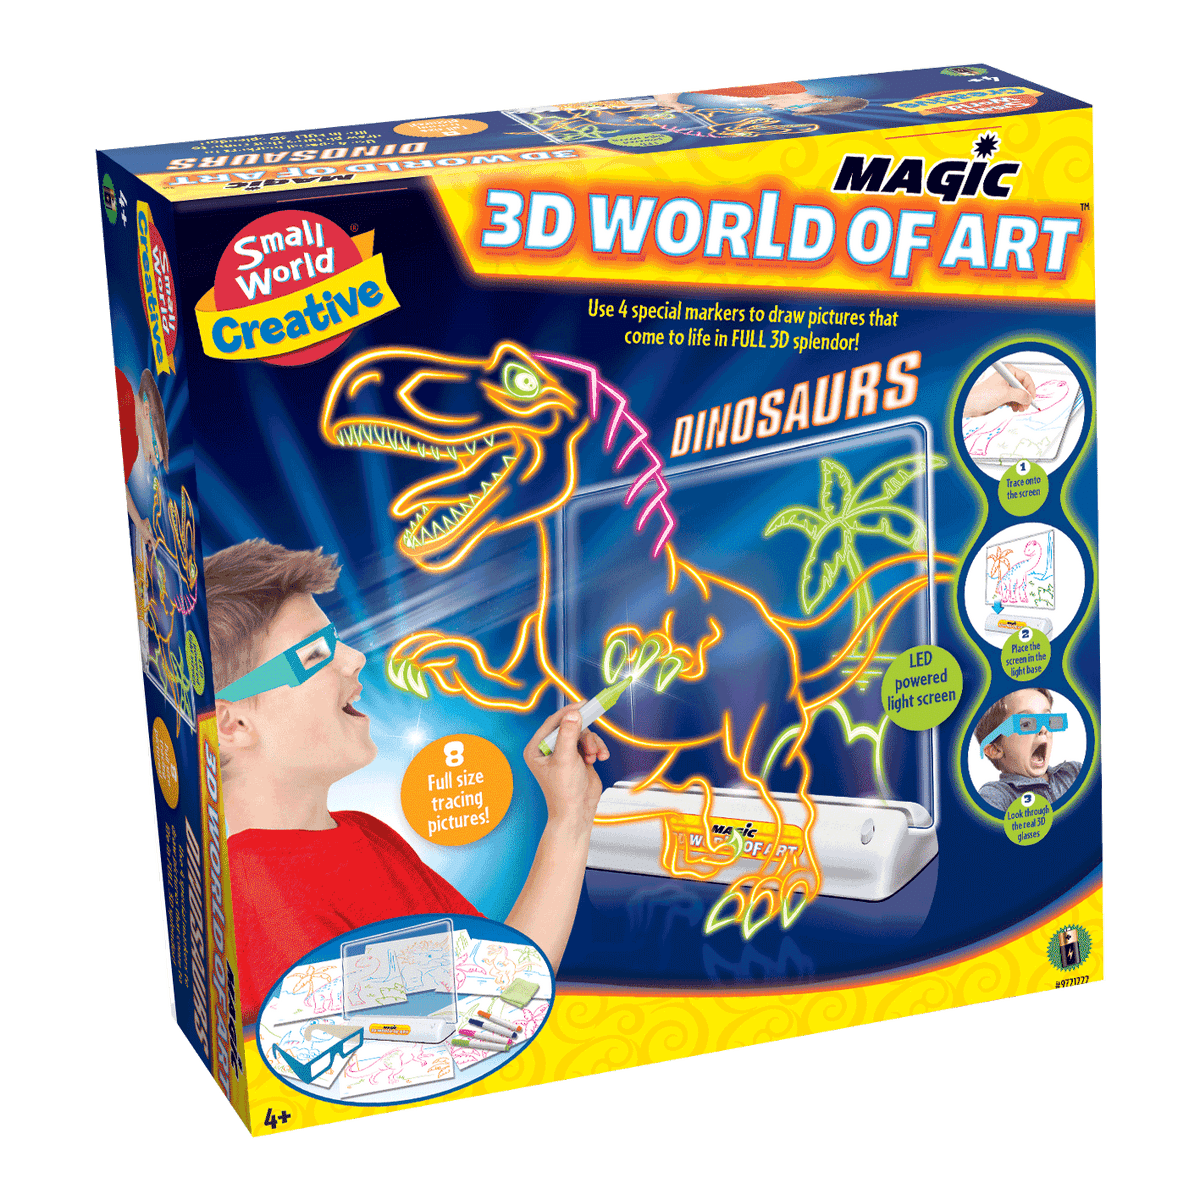 Magic 3D World of Art - Small World Creative - Toybox Tales